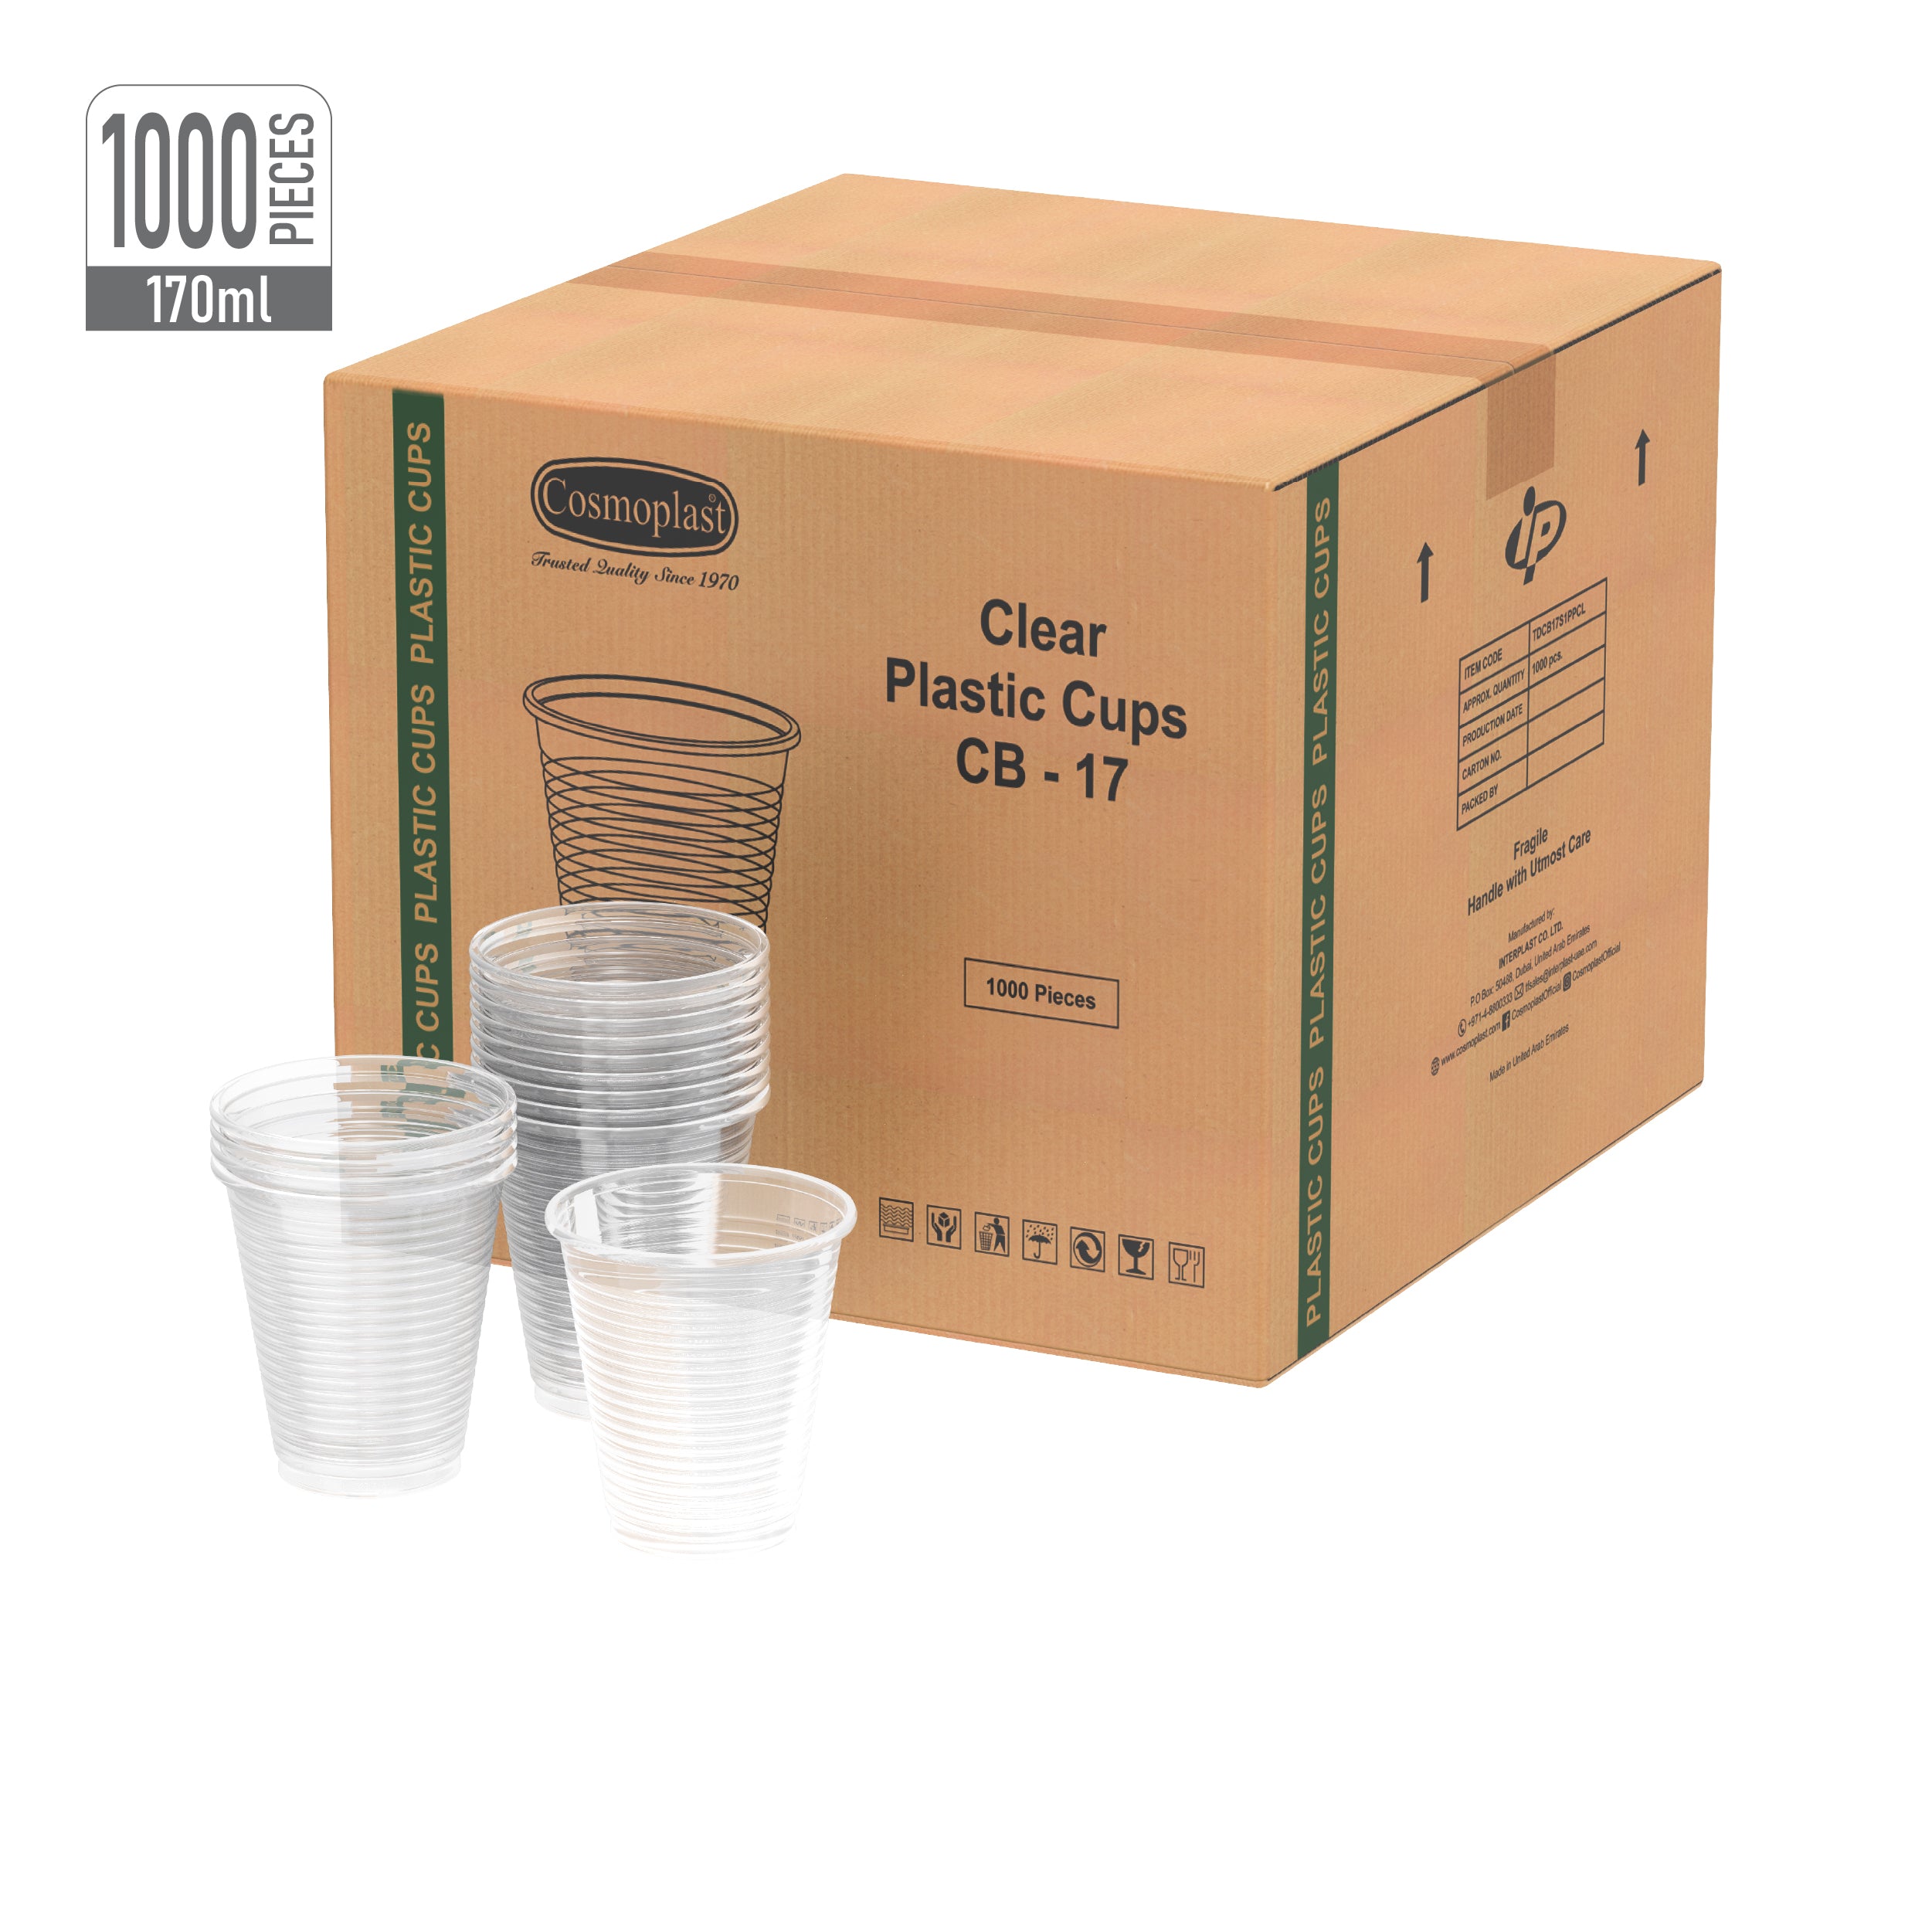 L3A Enterprise - For Sale Plastic Cups Sizes Available Wholesale price  (1000 pcs) 5 oz - Php 13.00/pack 6 oz - Php 13.75/pack 7 oz - Php  14.50/pack 8 oz - Php